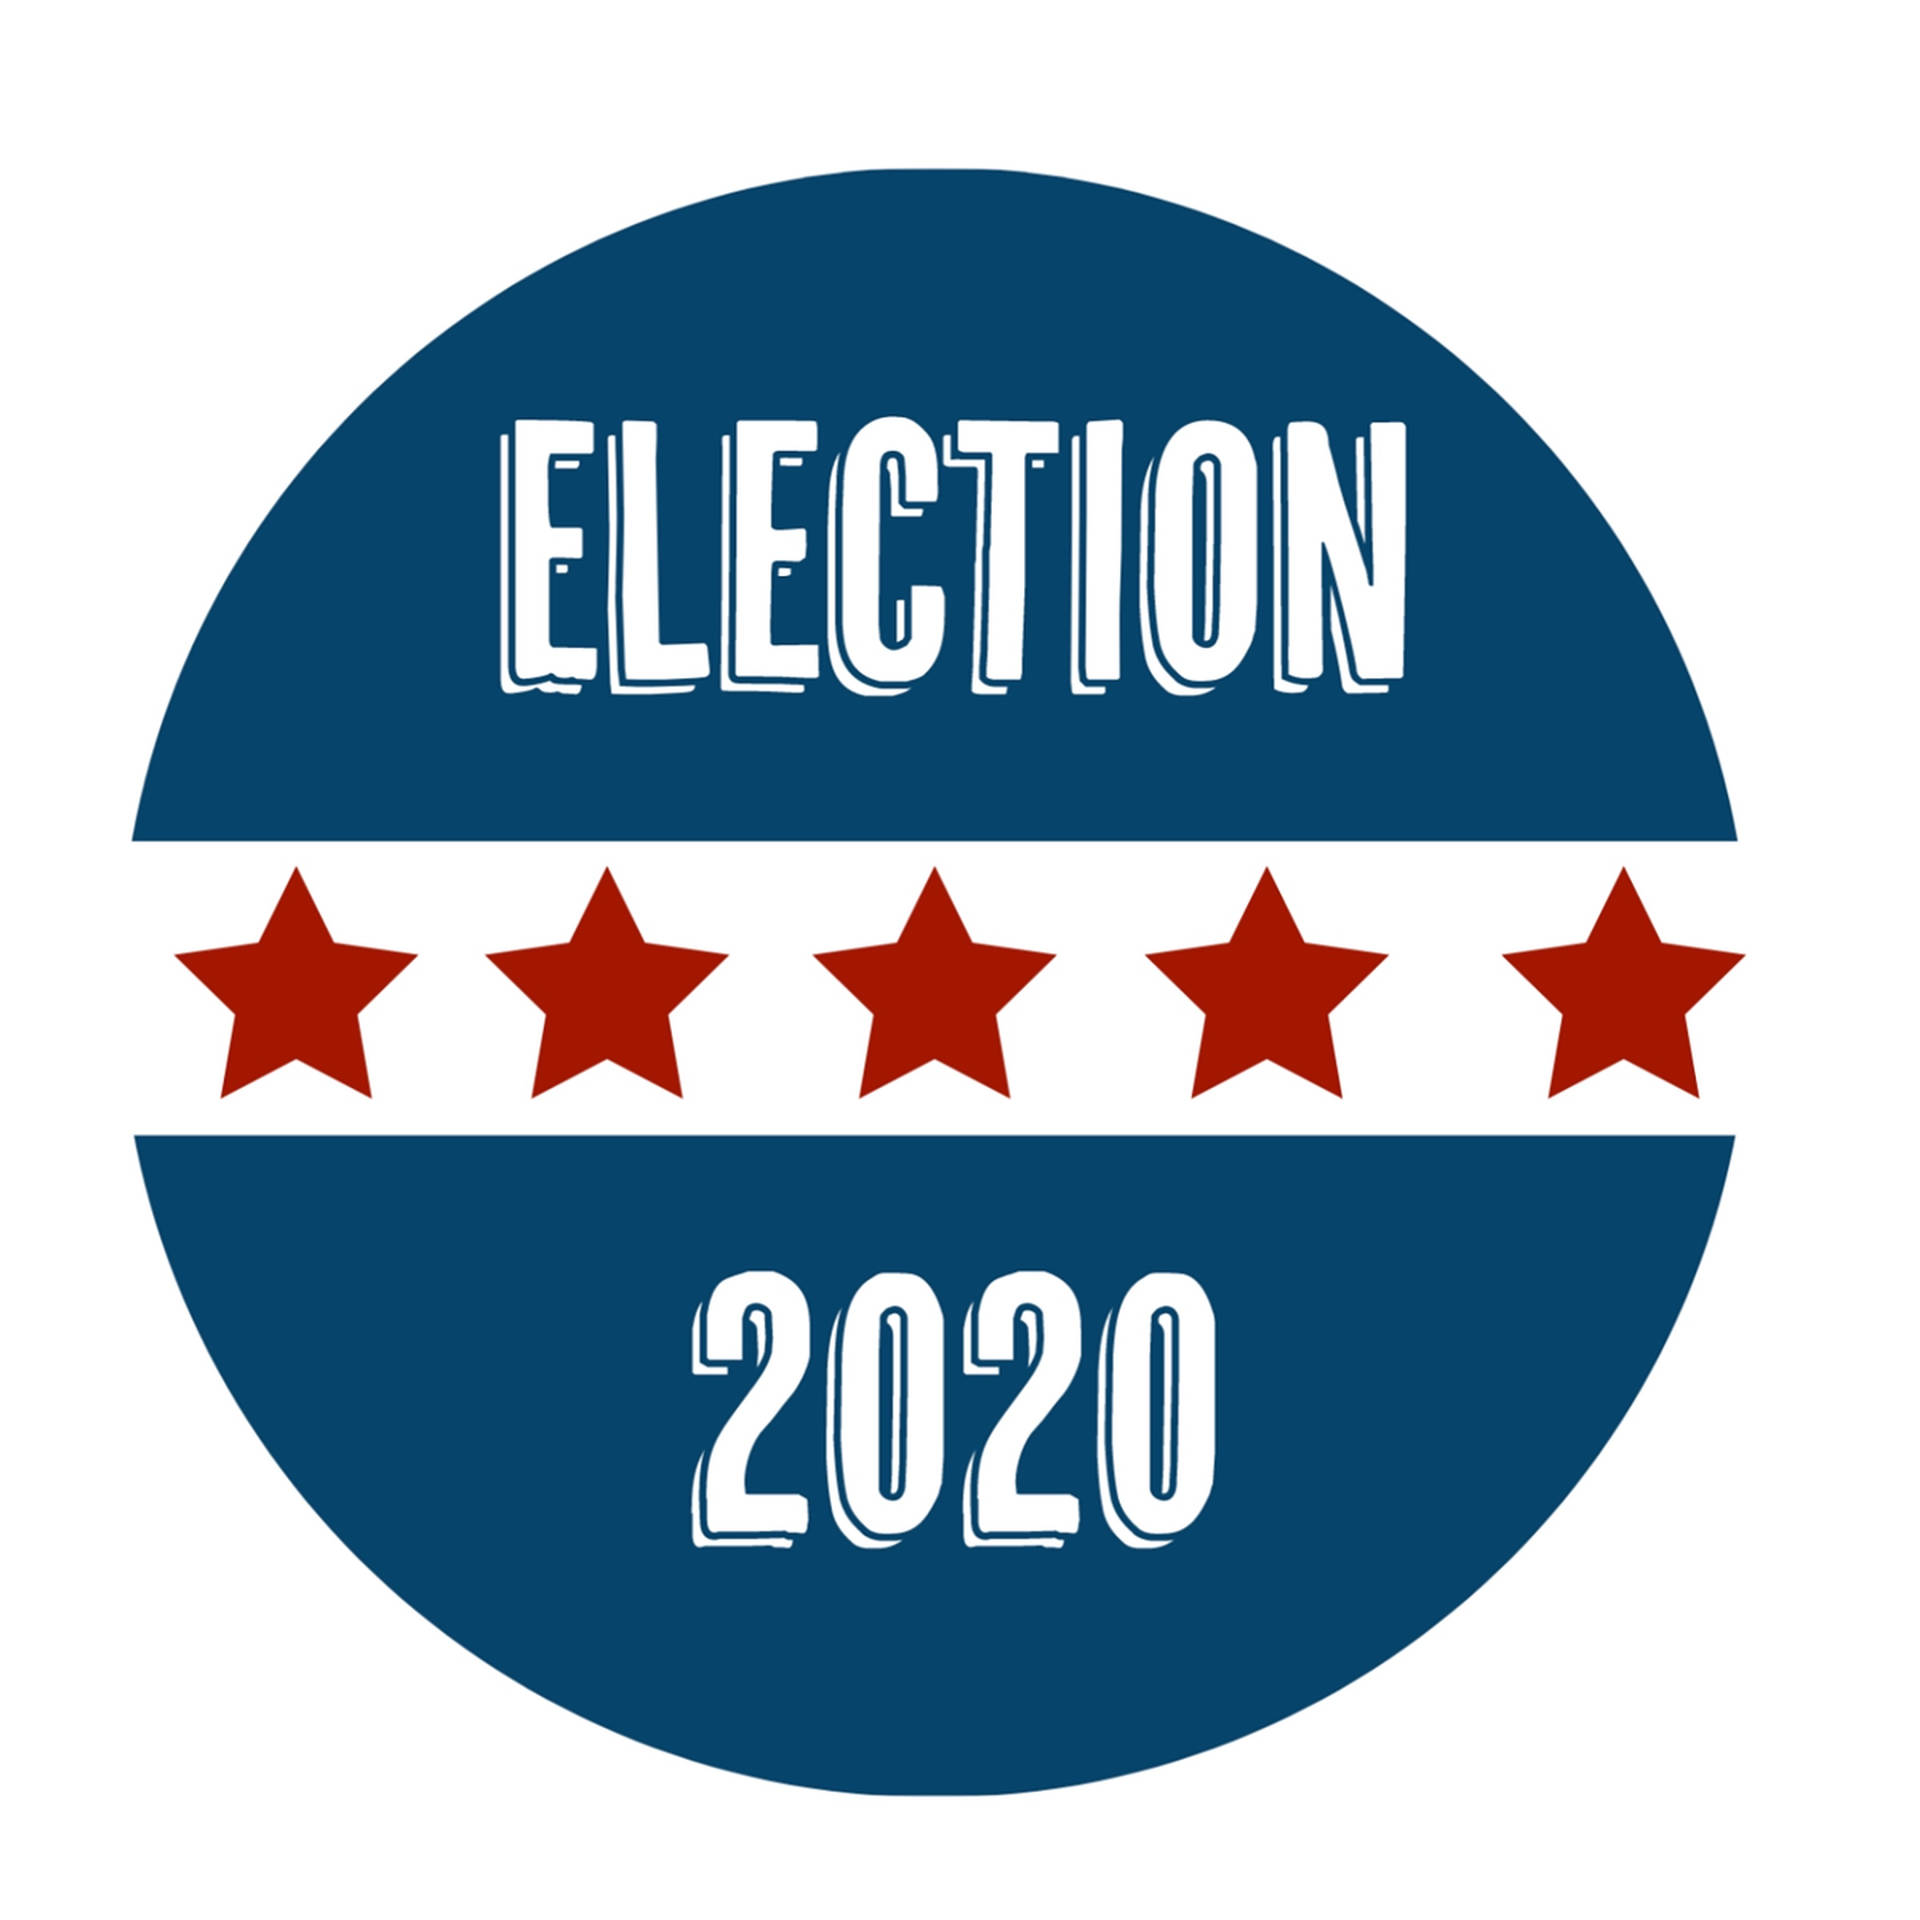 Caption: 2020 Election Campaign Bumper Sticker Background